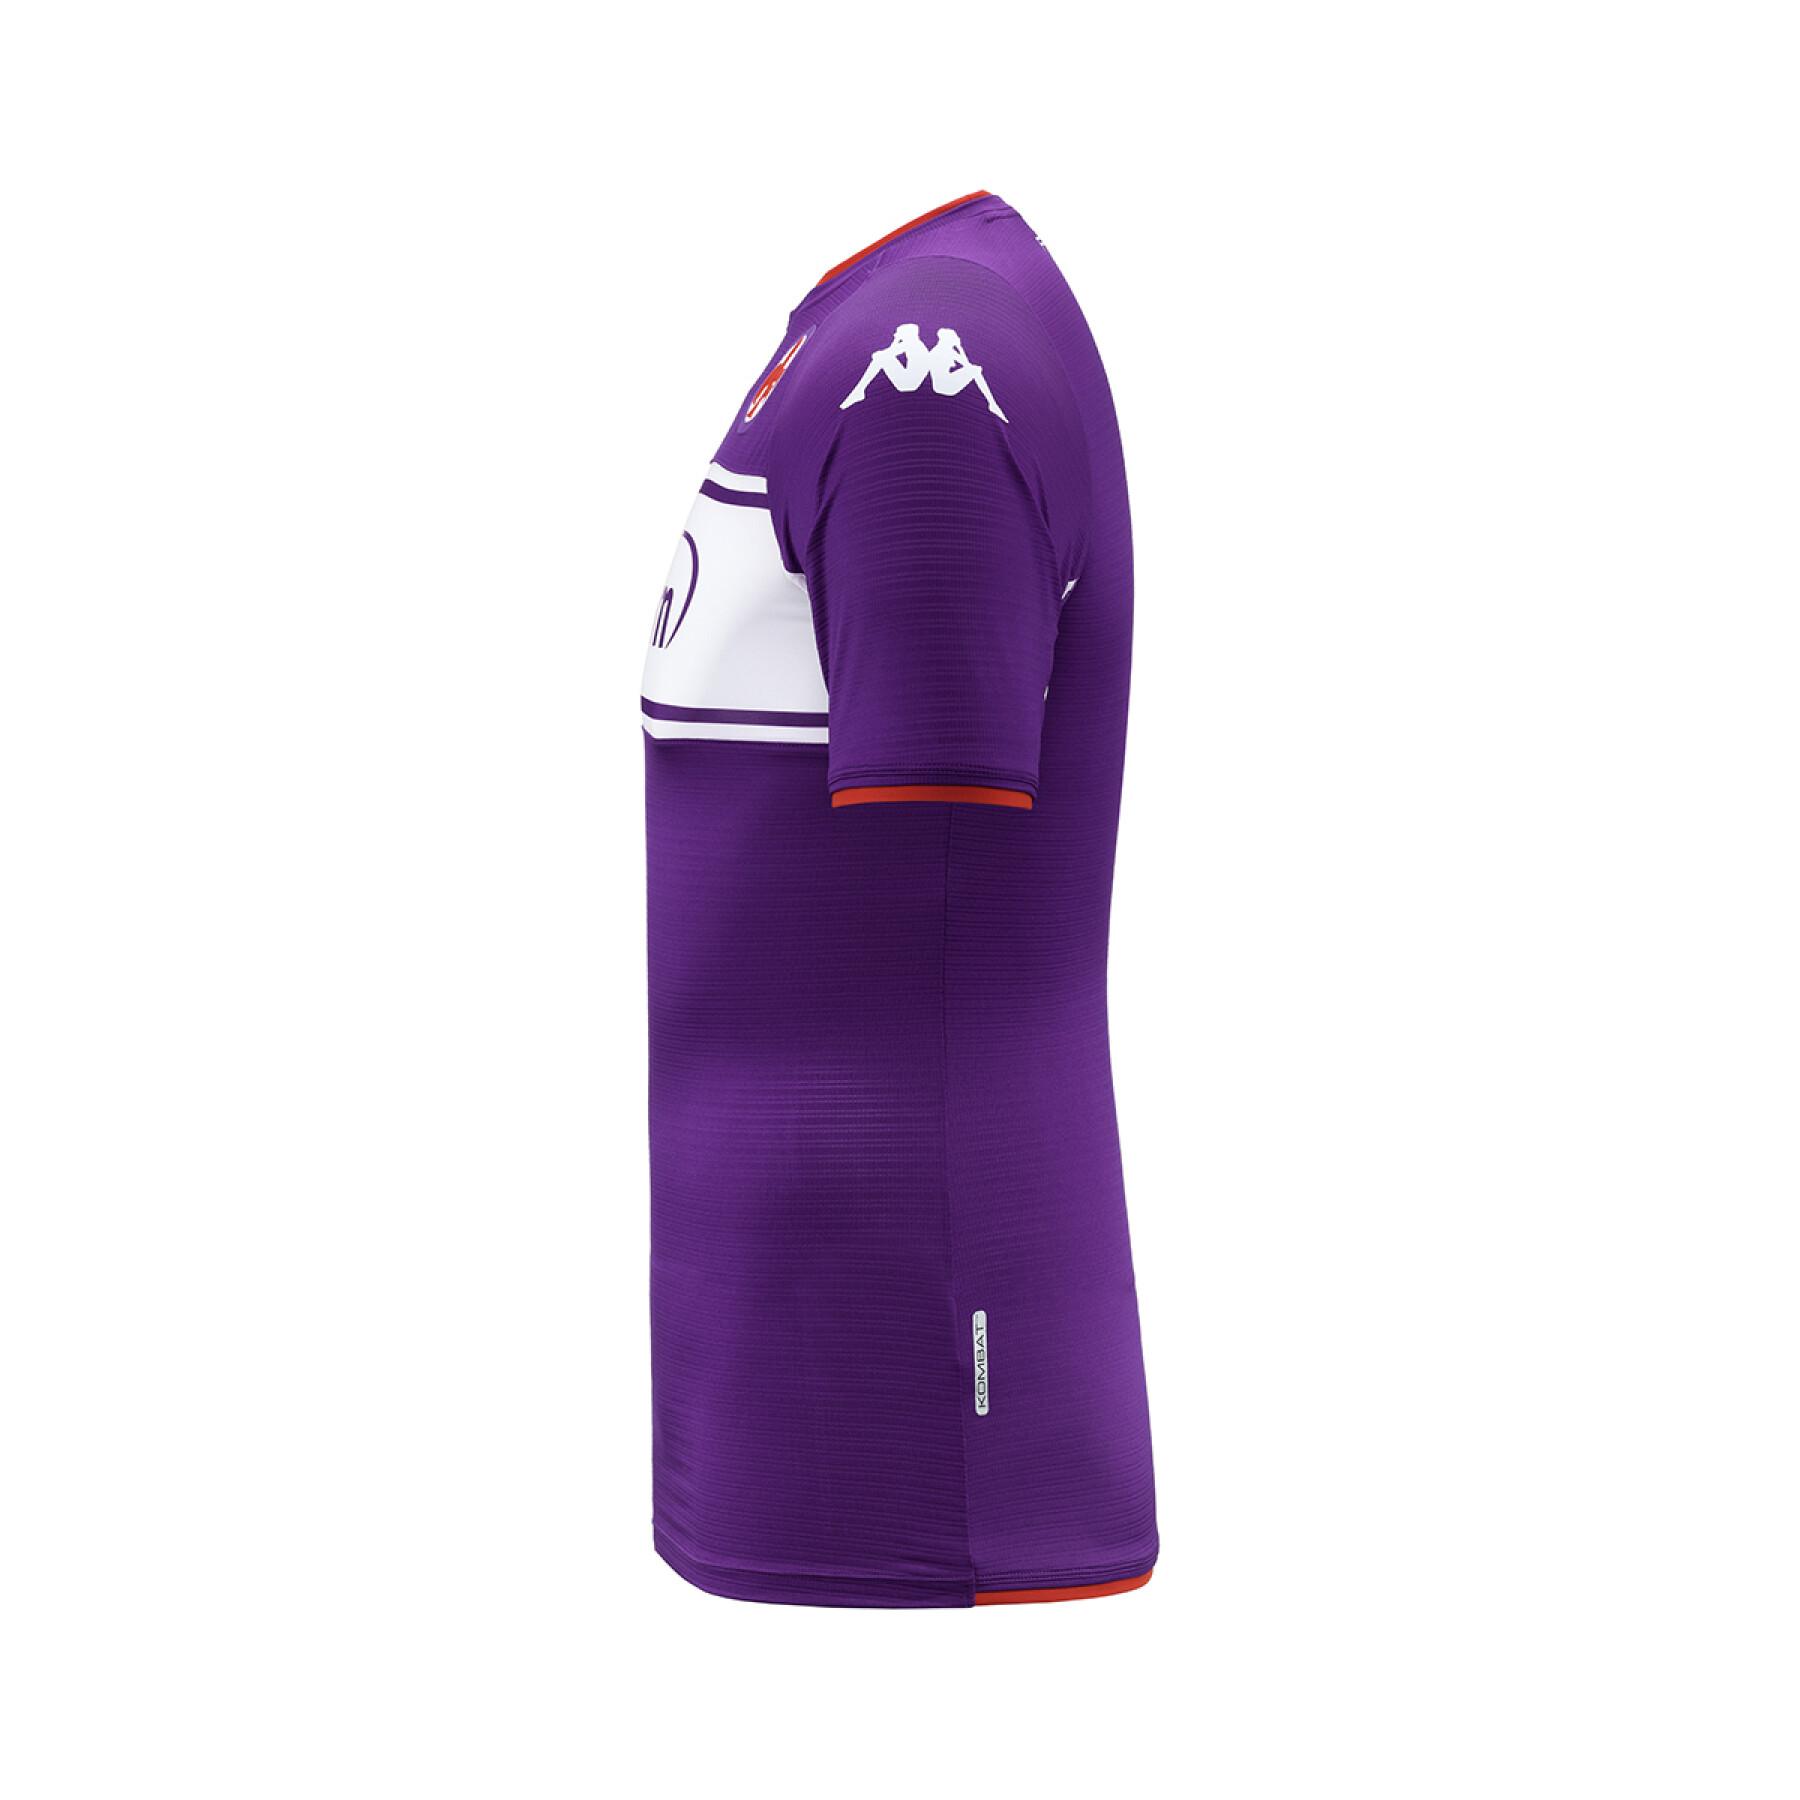 Authentic home jersey Fiorentina AC 2021/22